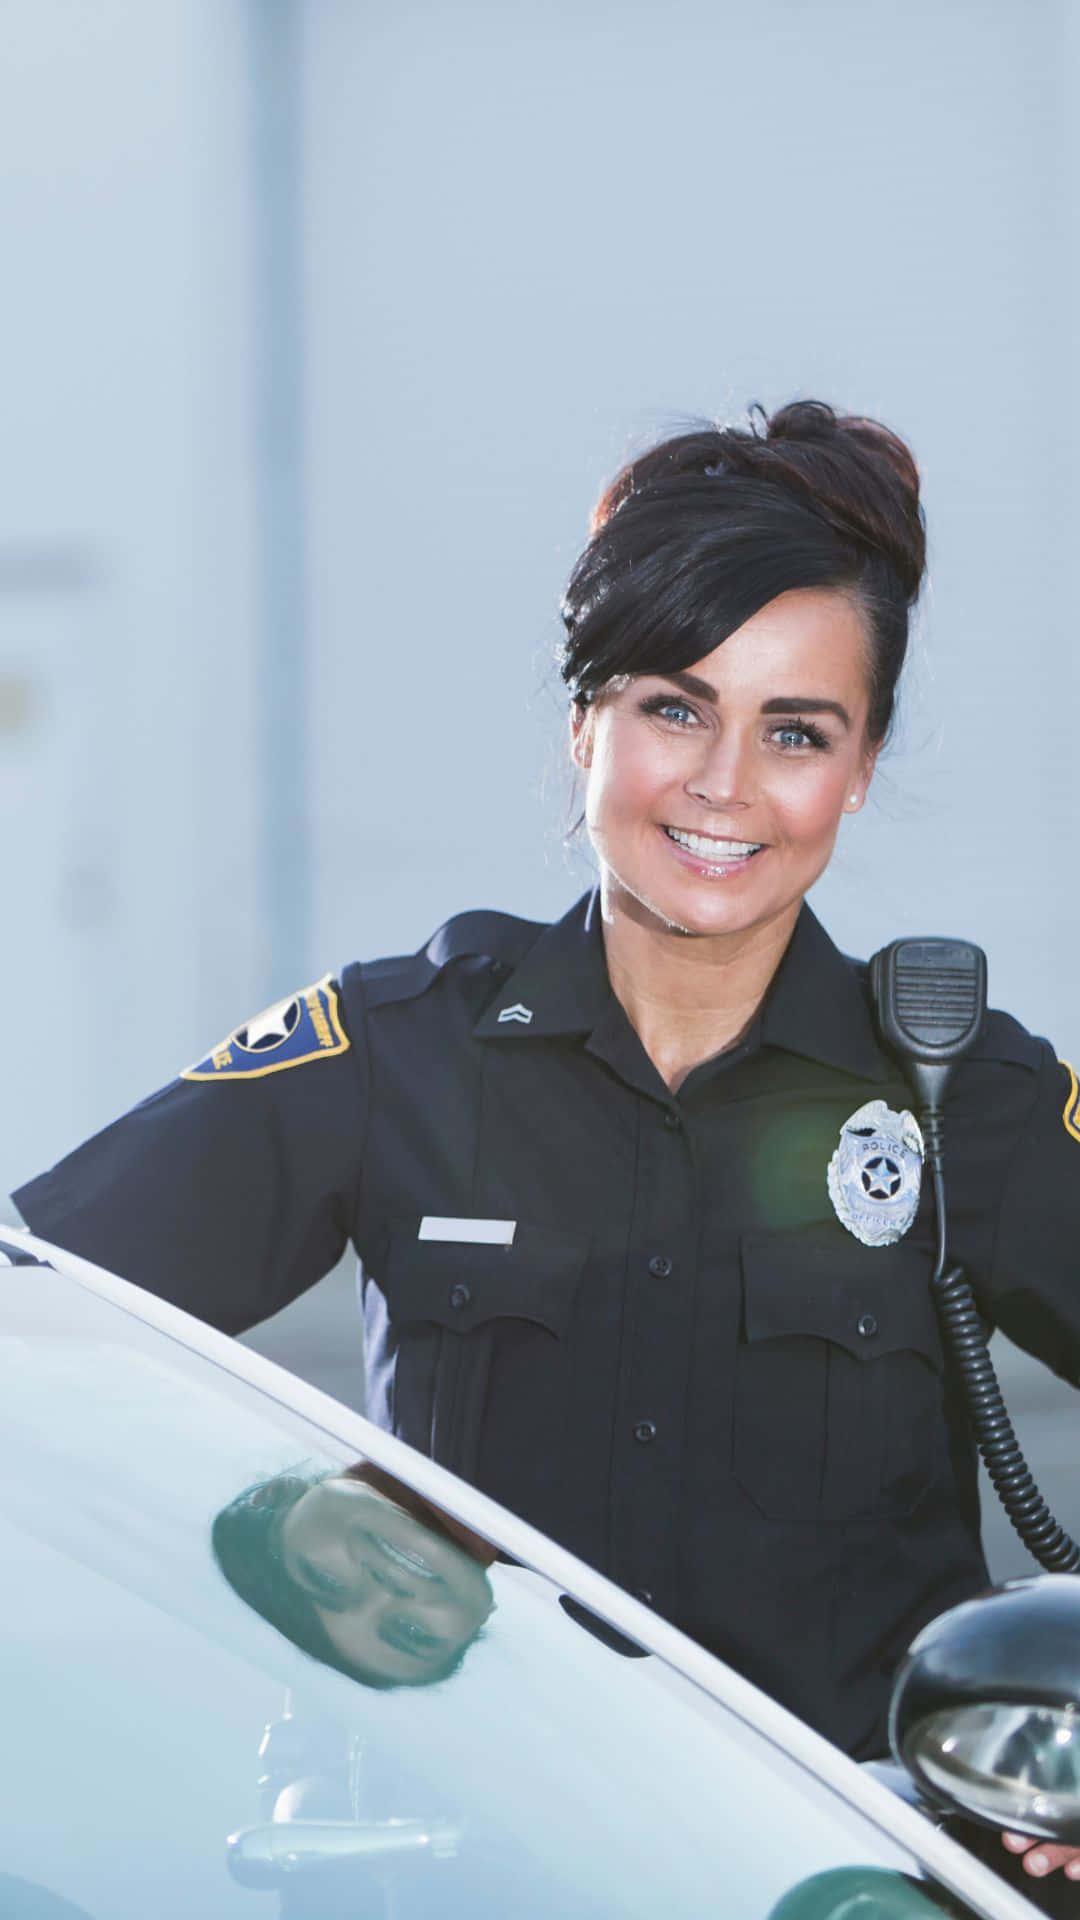 Cop Policewoman Smiling Standing Beside Vehicle Wallpaper